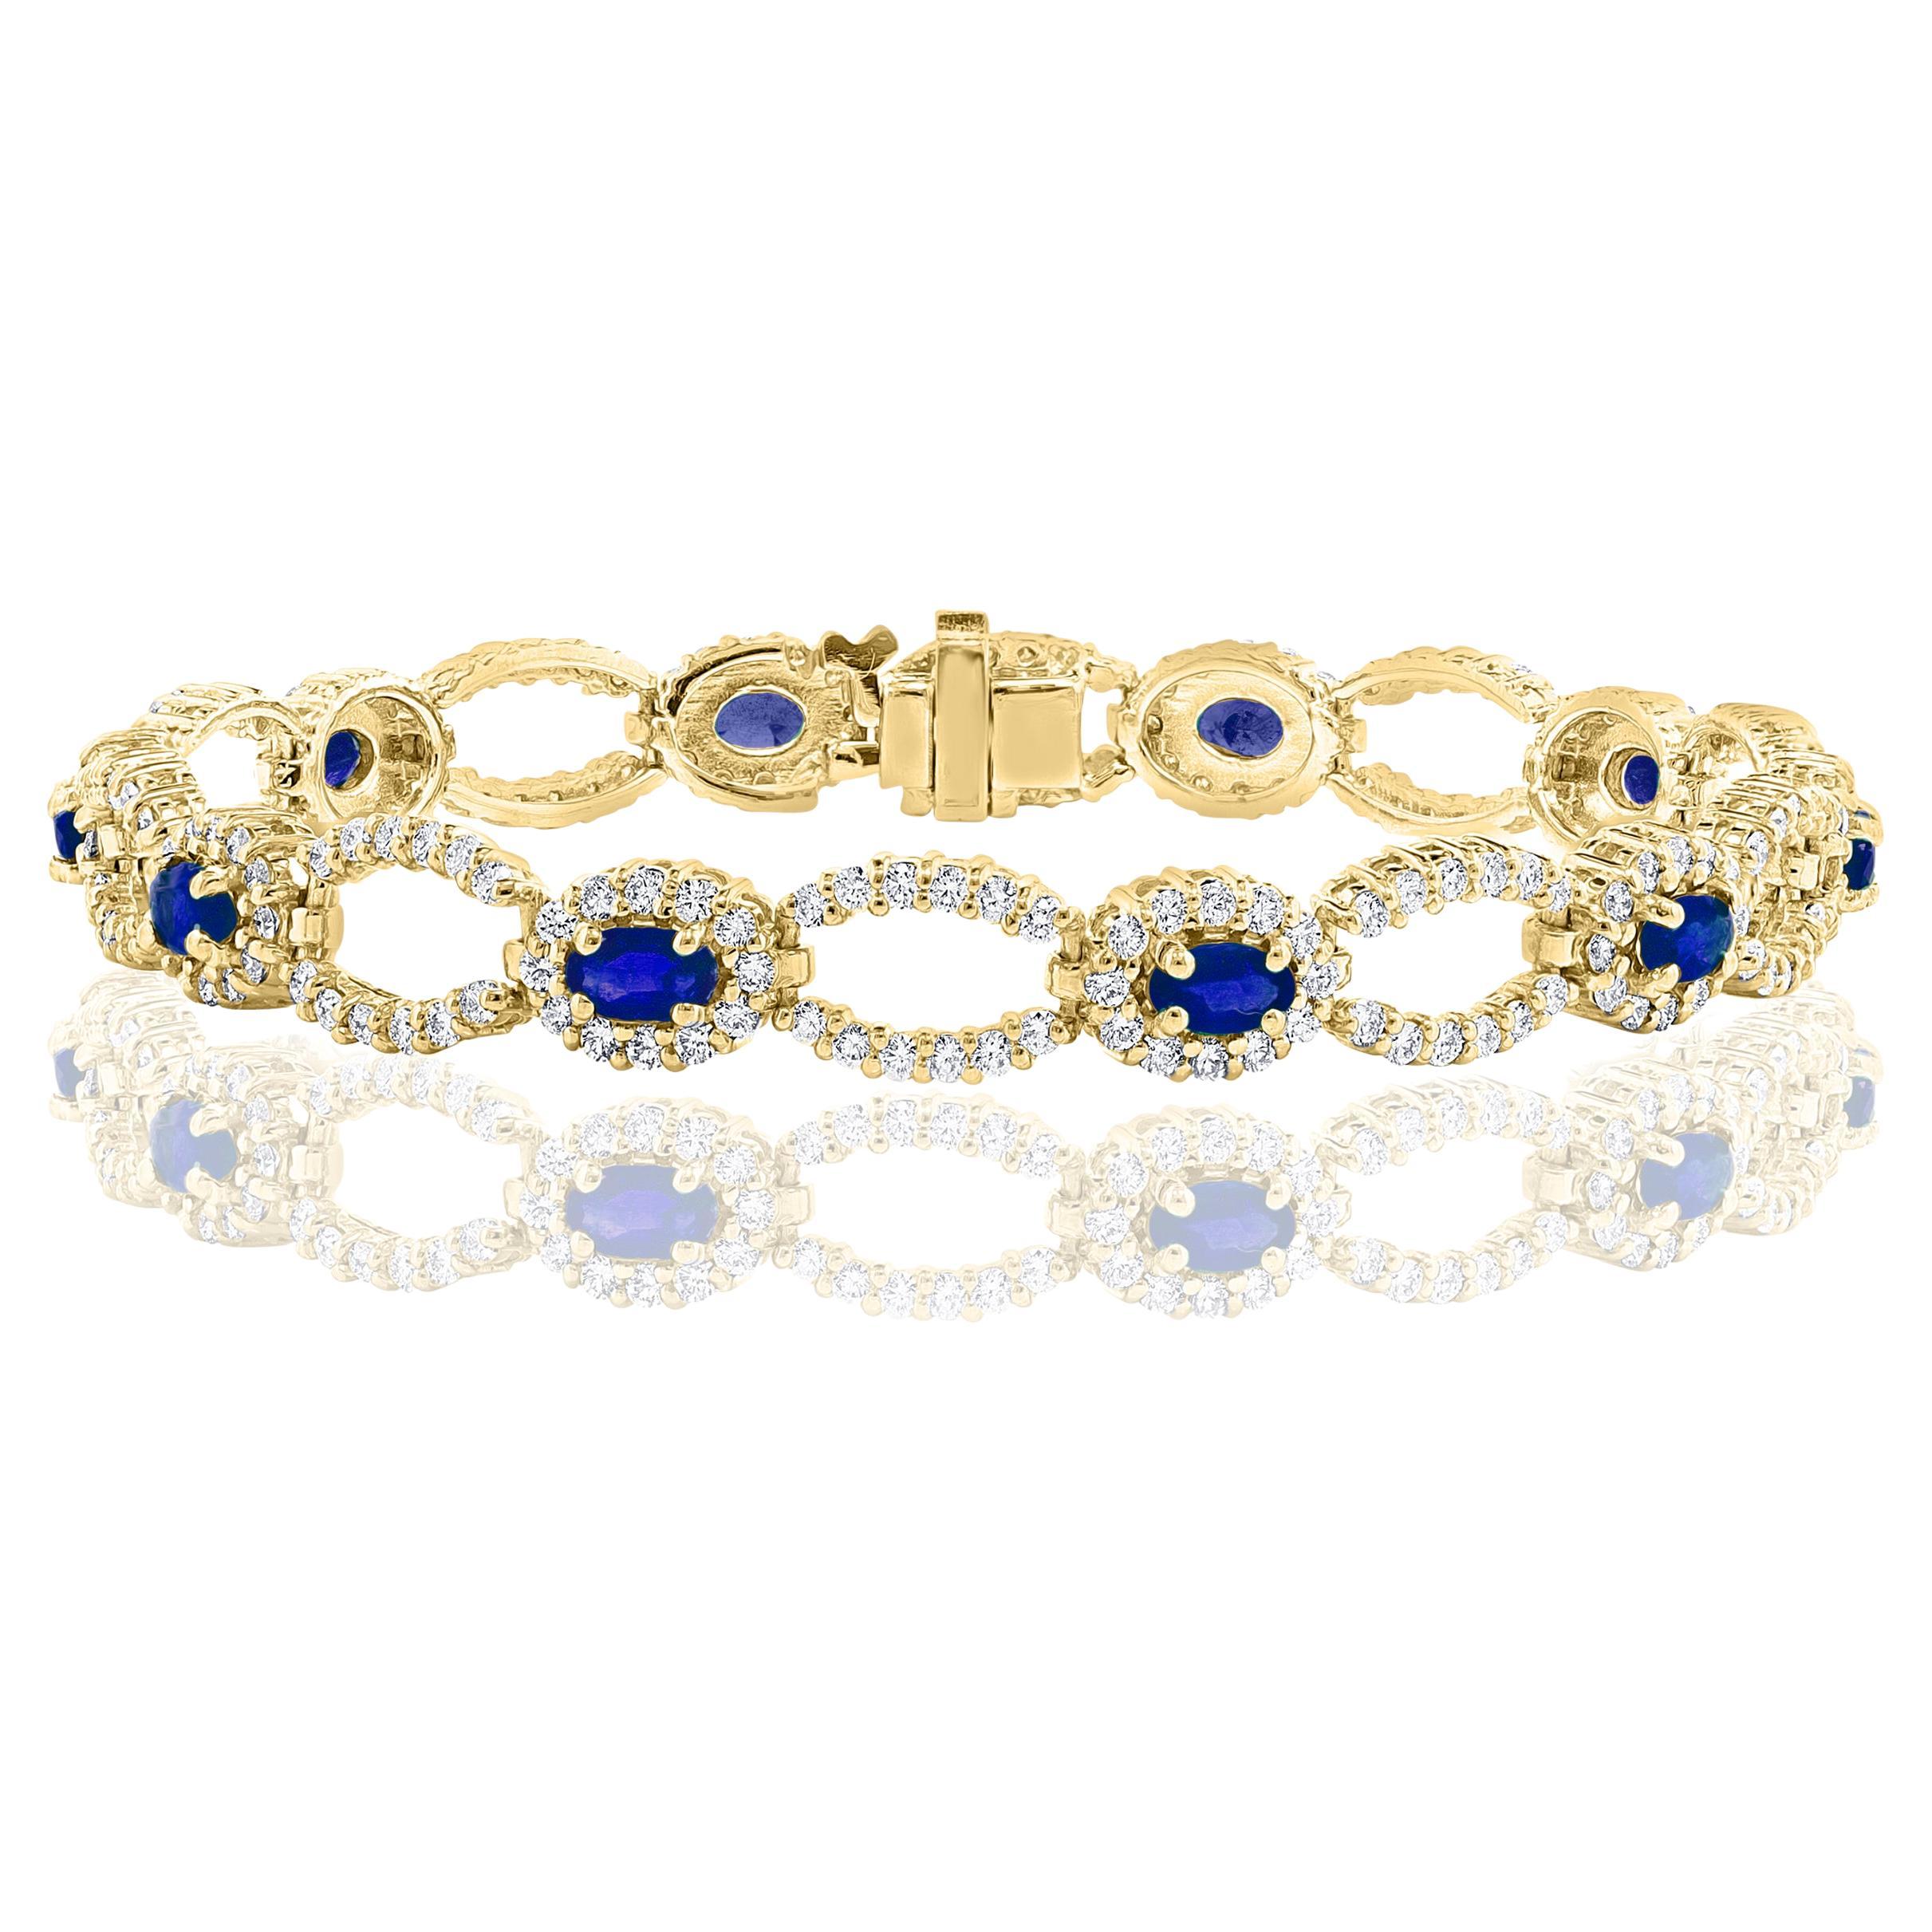 Open-Work 3.60 Carat Blue Sapphire and Diamond Bracelet in 14K Yellow Gold